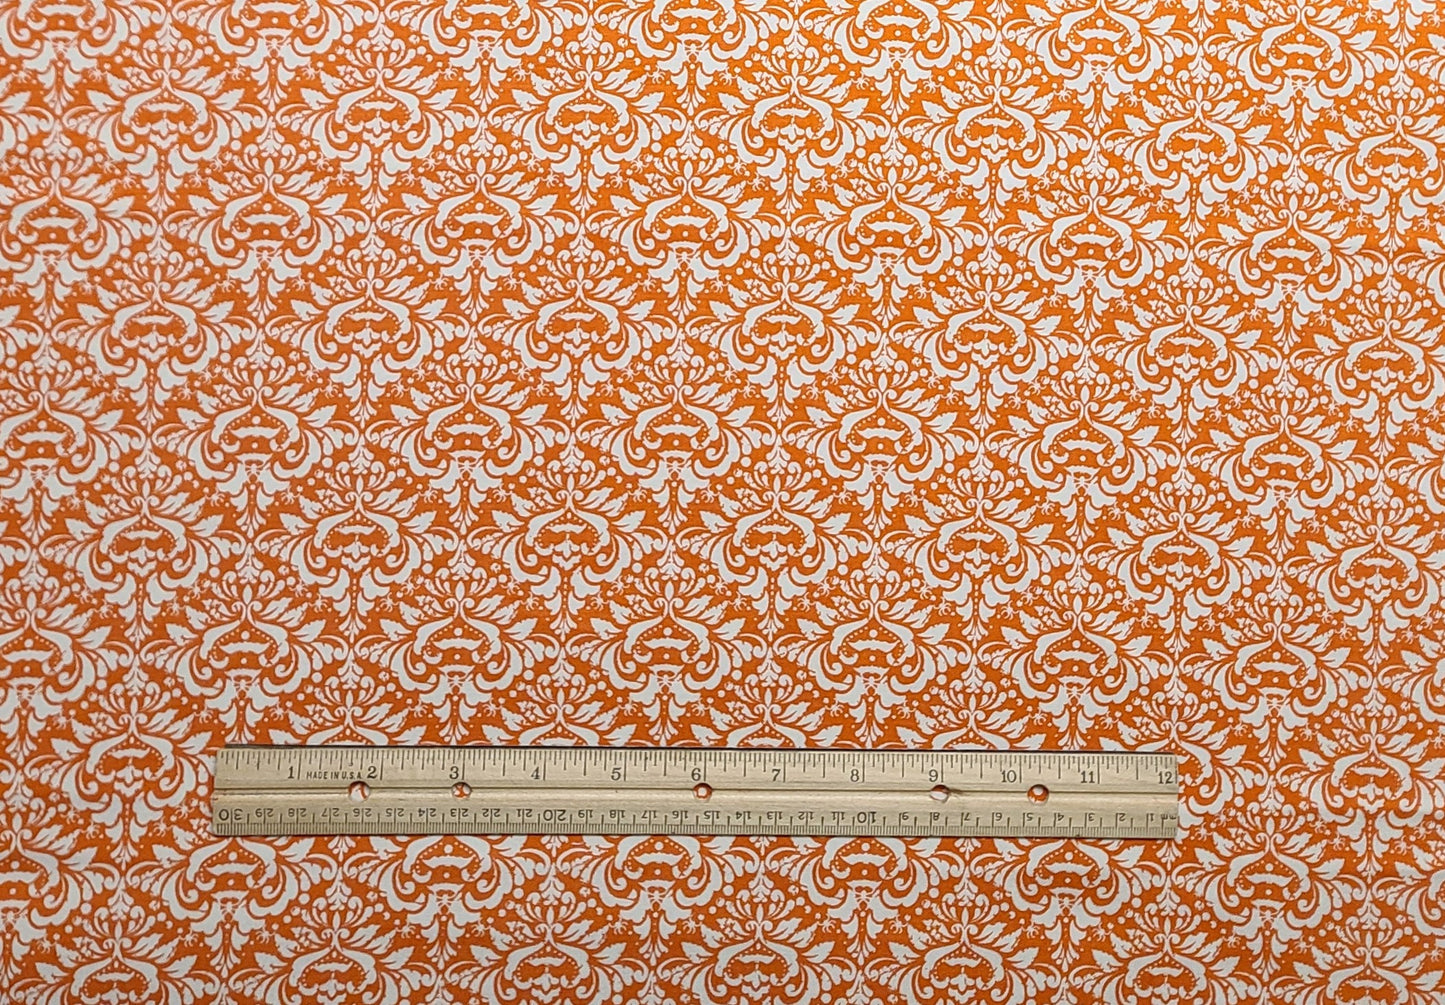 Riley Blake Designs Pattern#C6013 EEK-BOO-SHREEK by Carina Gardner 2017 - Orange Fabric / White "Diamond" Pattern with Spiders and Bats